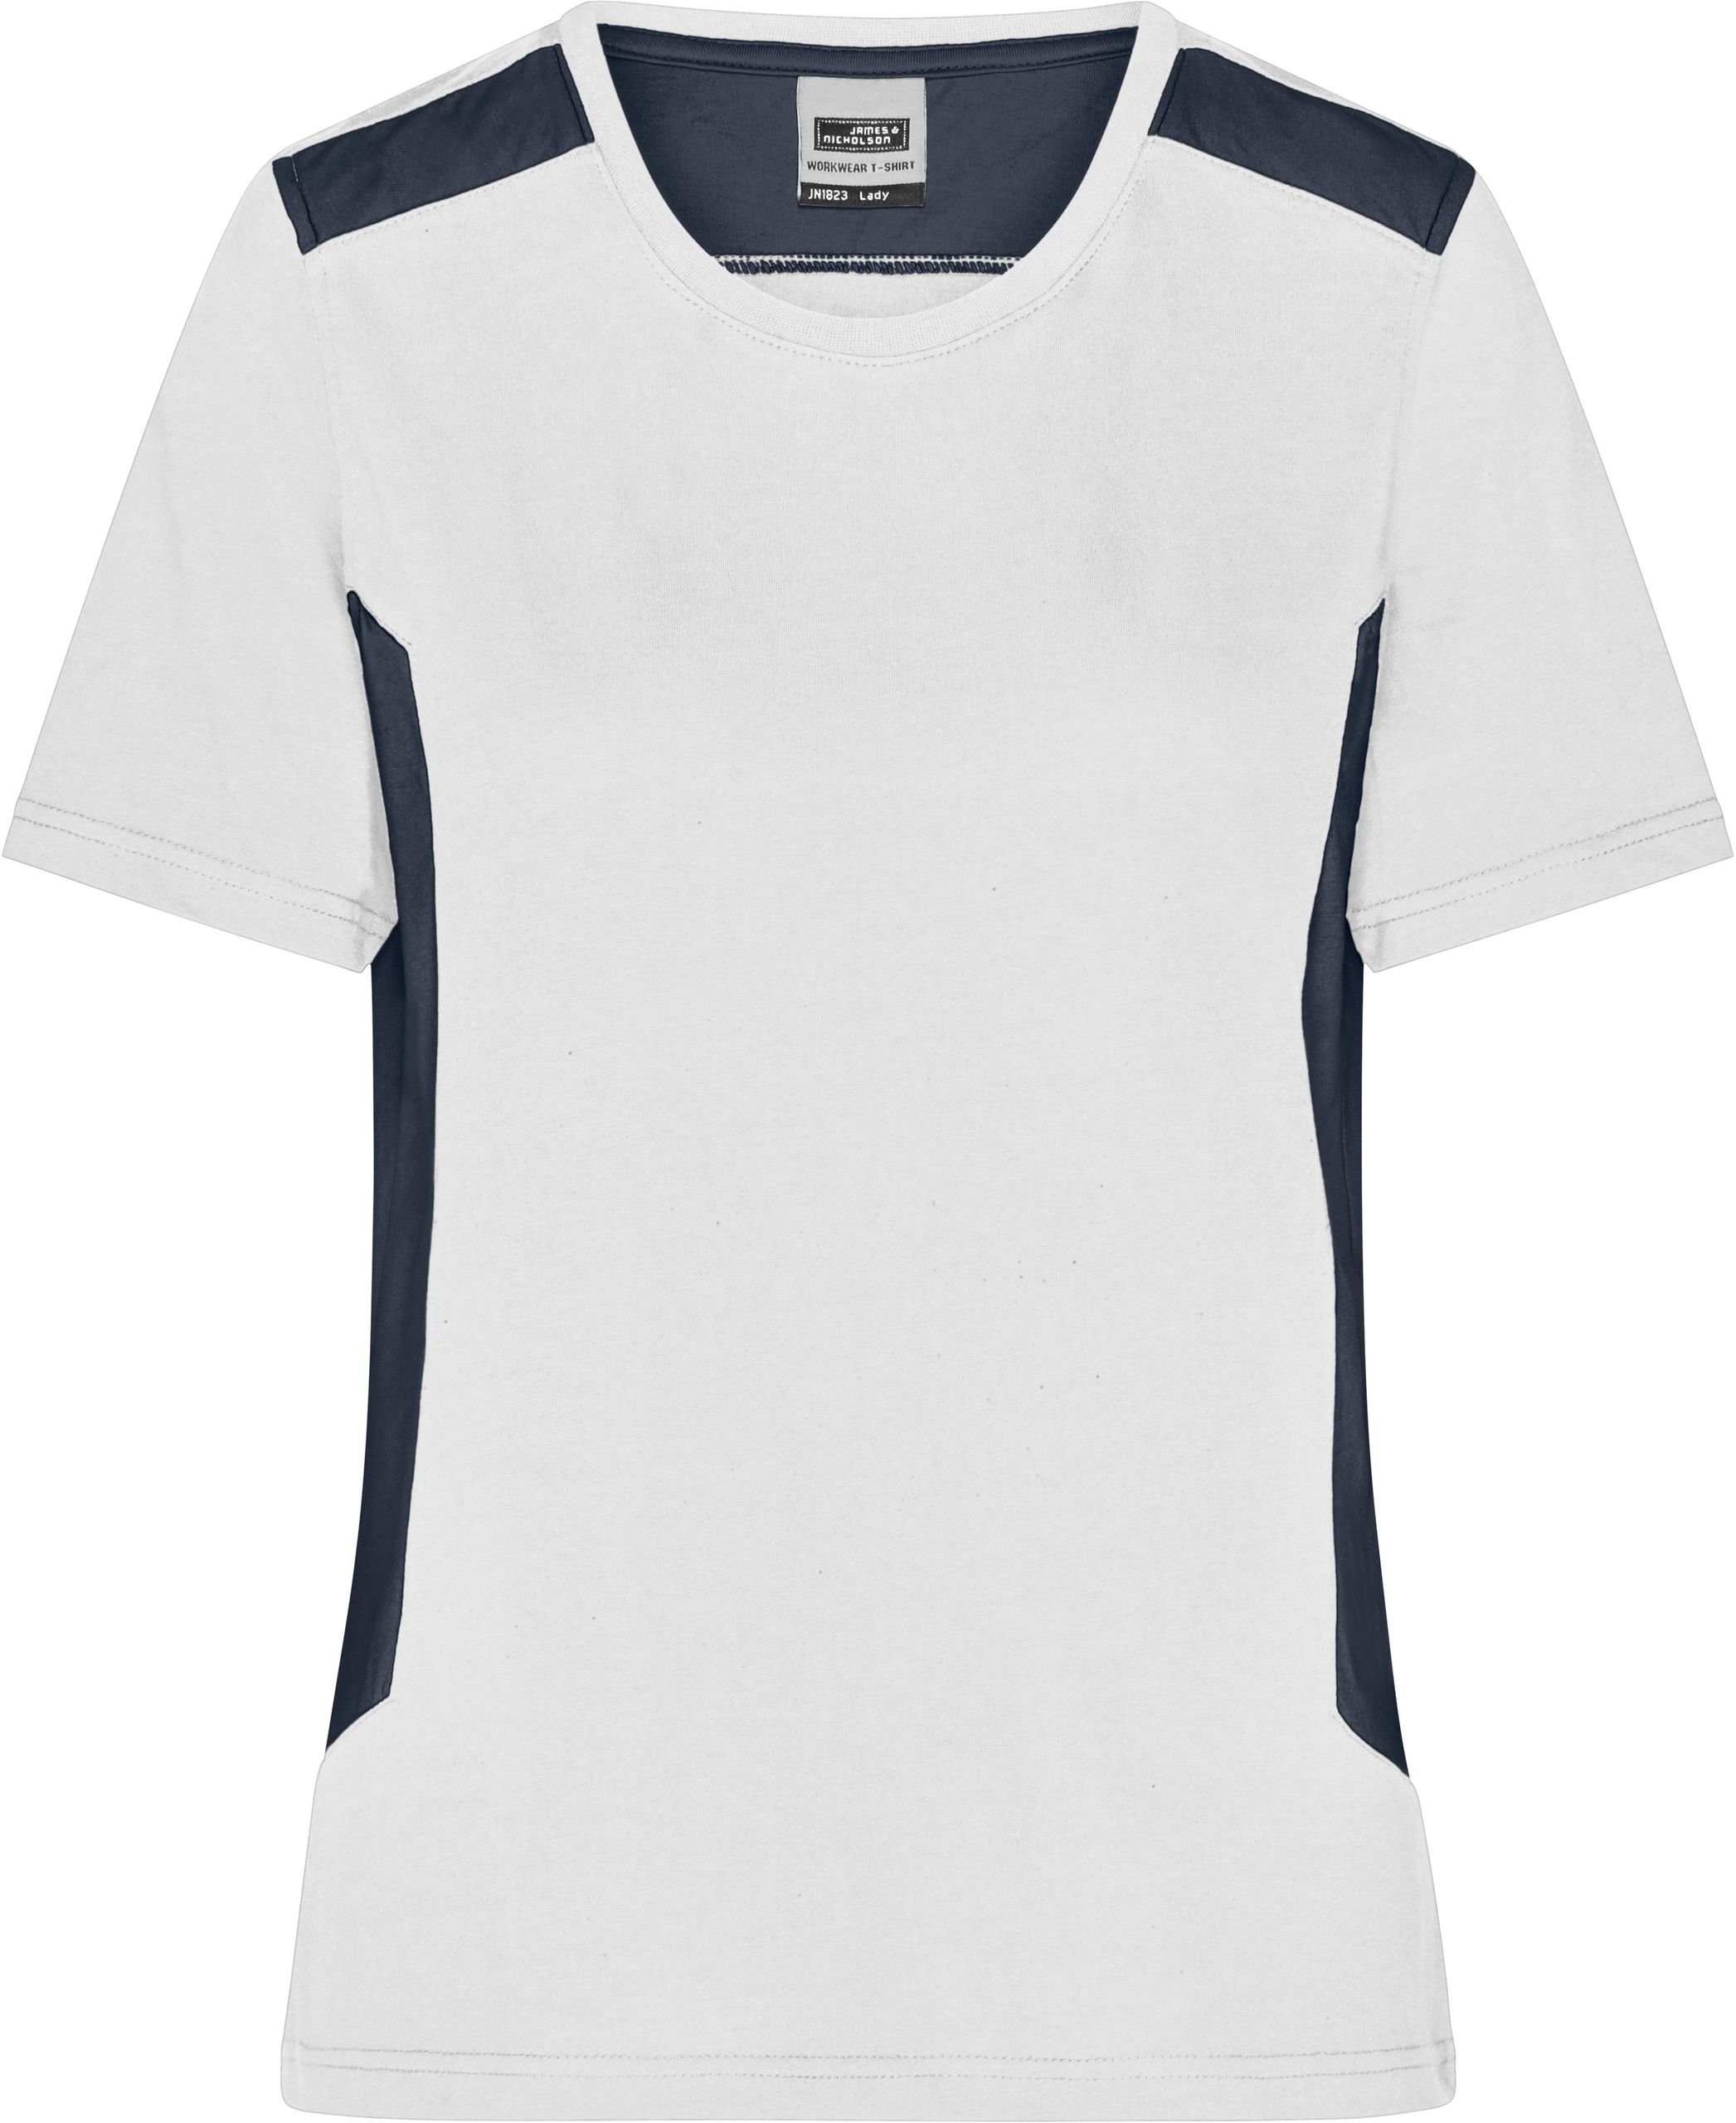 Strong Nicholson & T-Shirt white/carbon Workwear James - Damen T-Shirt